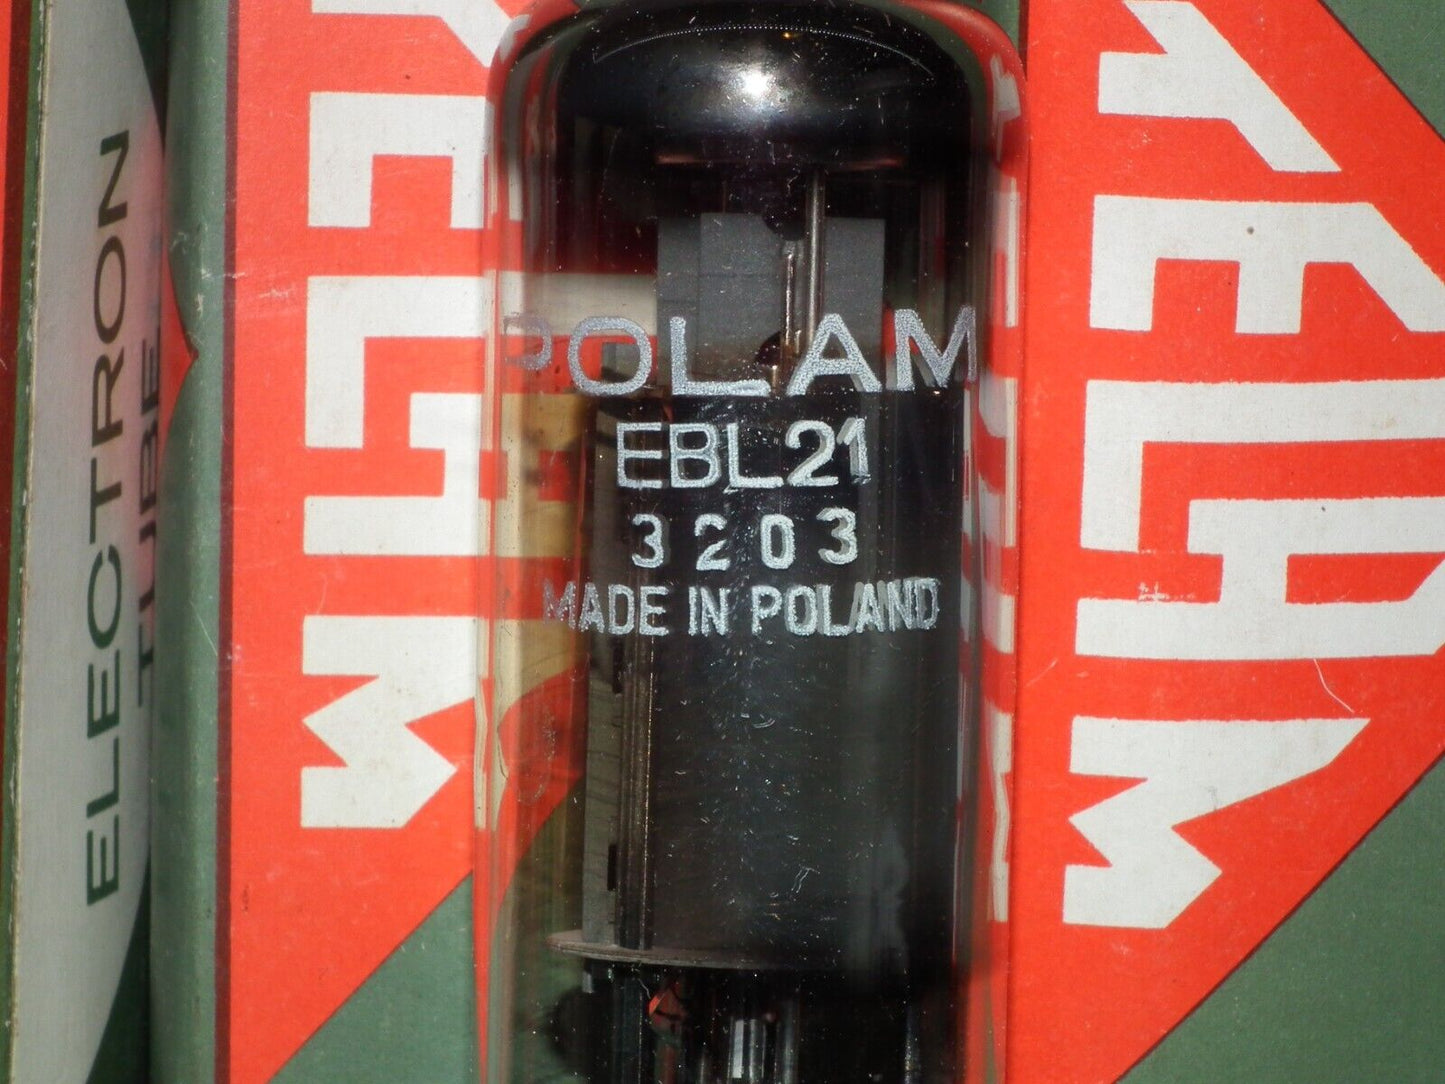 EBL21 Polam Telam NOS NIB Old European Radio Receivers